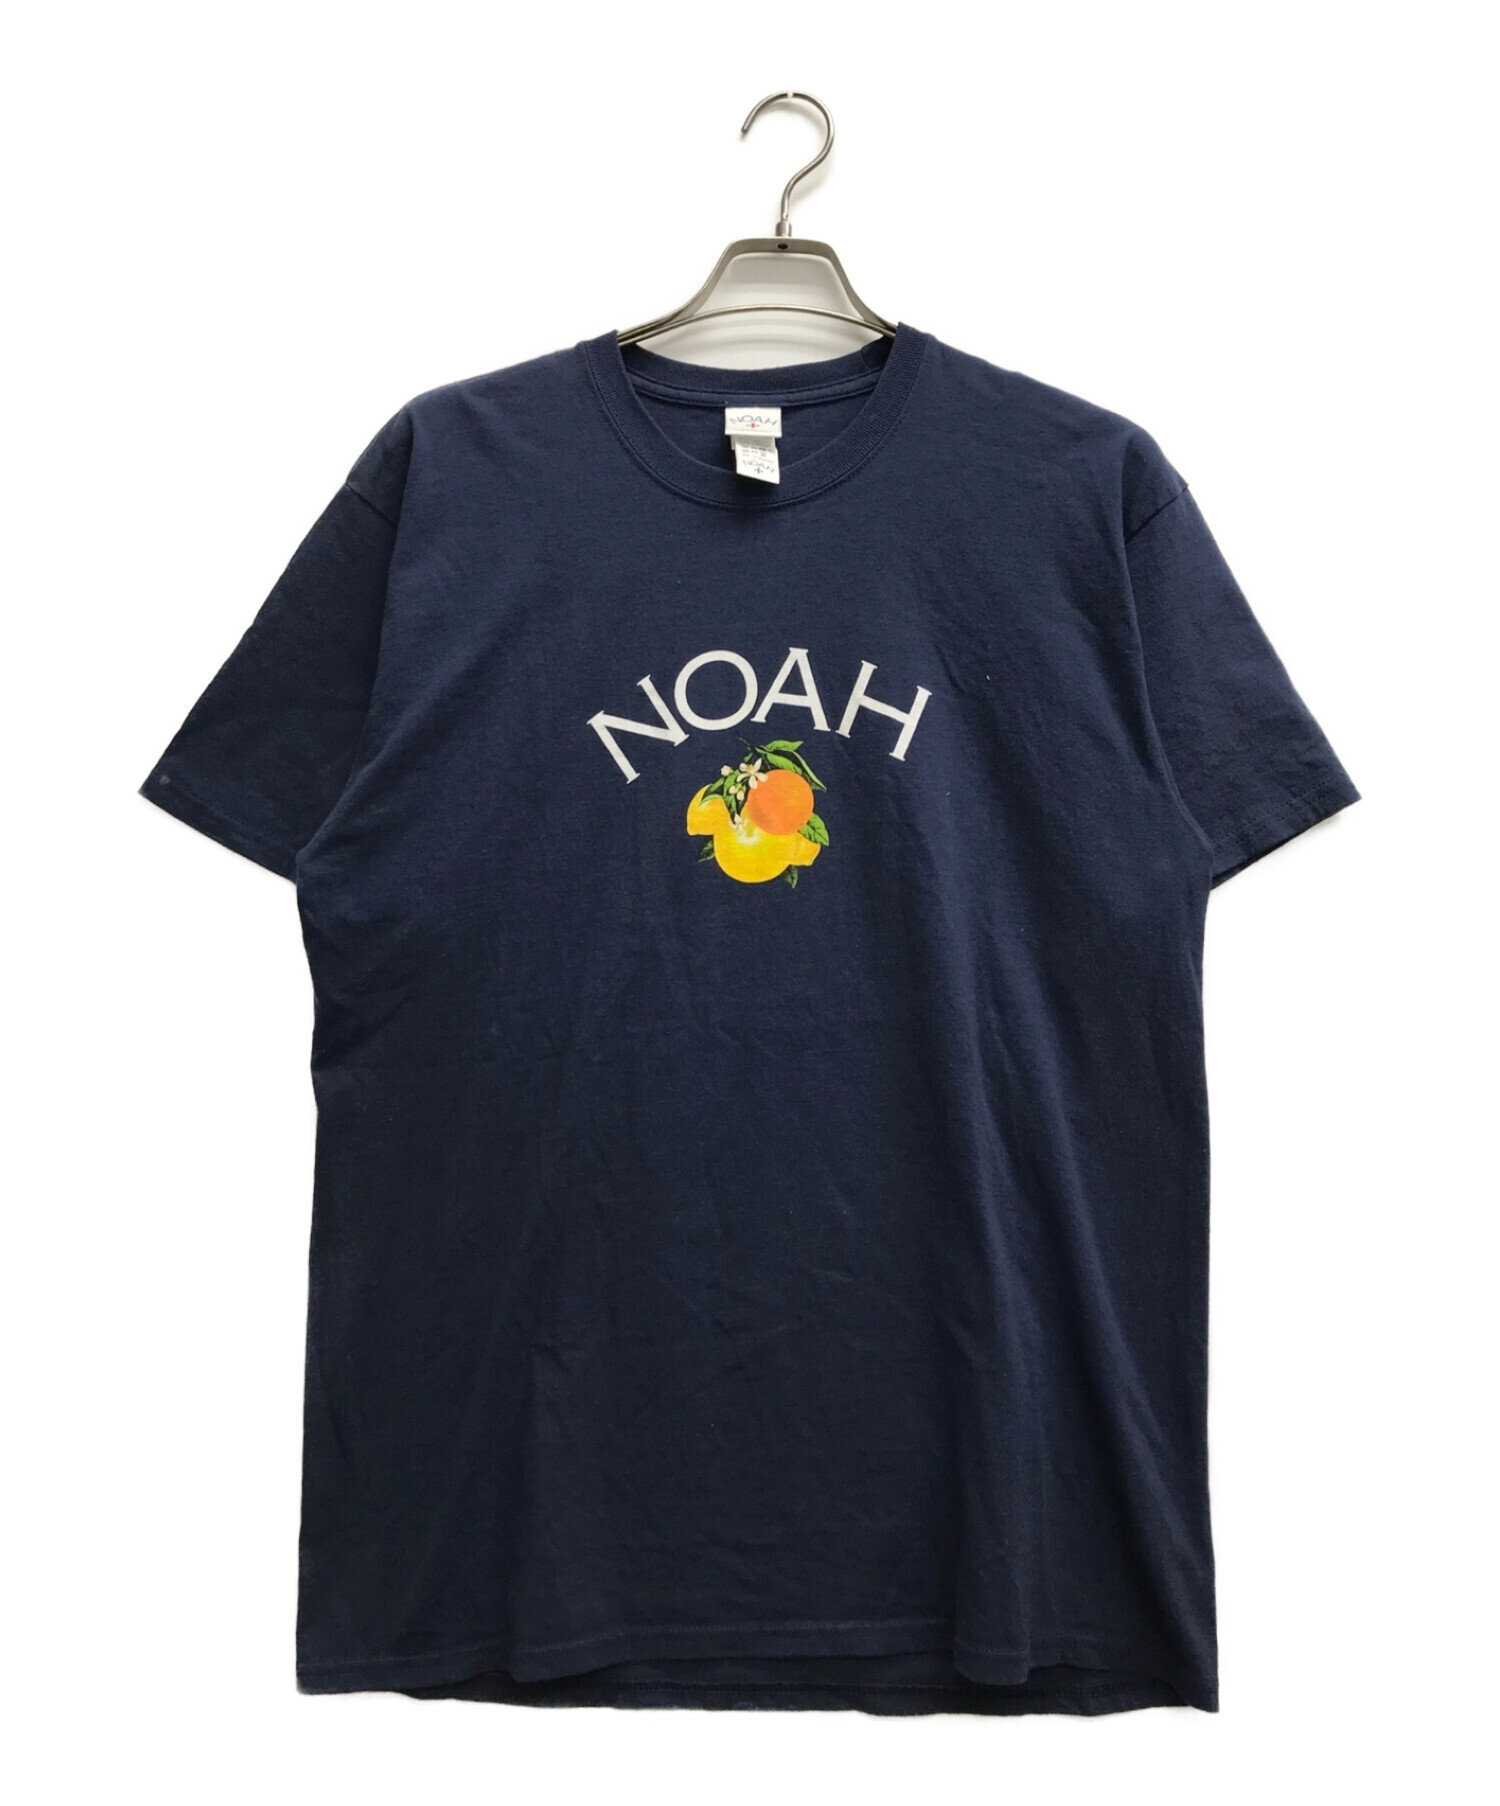 Noah (ノア) フルーツTシャツ ネイビー サイズ:L